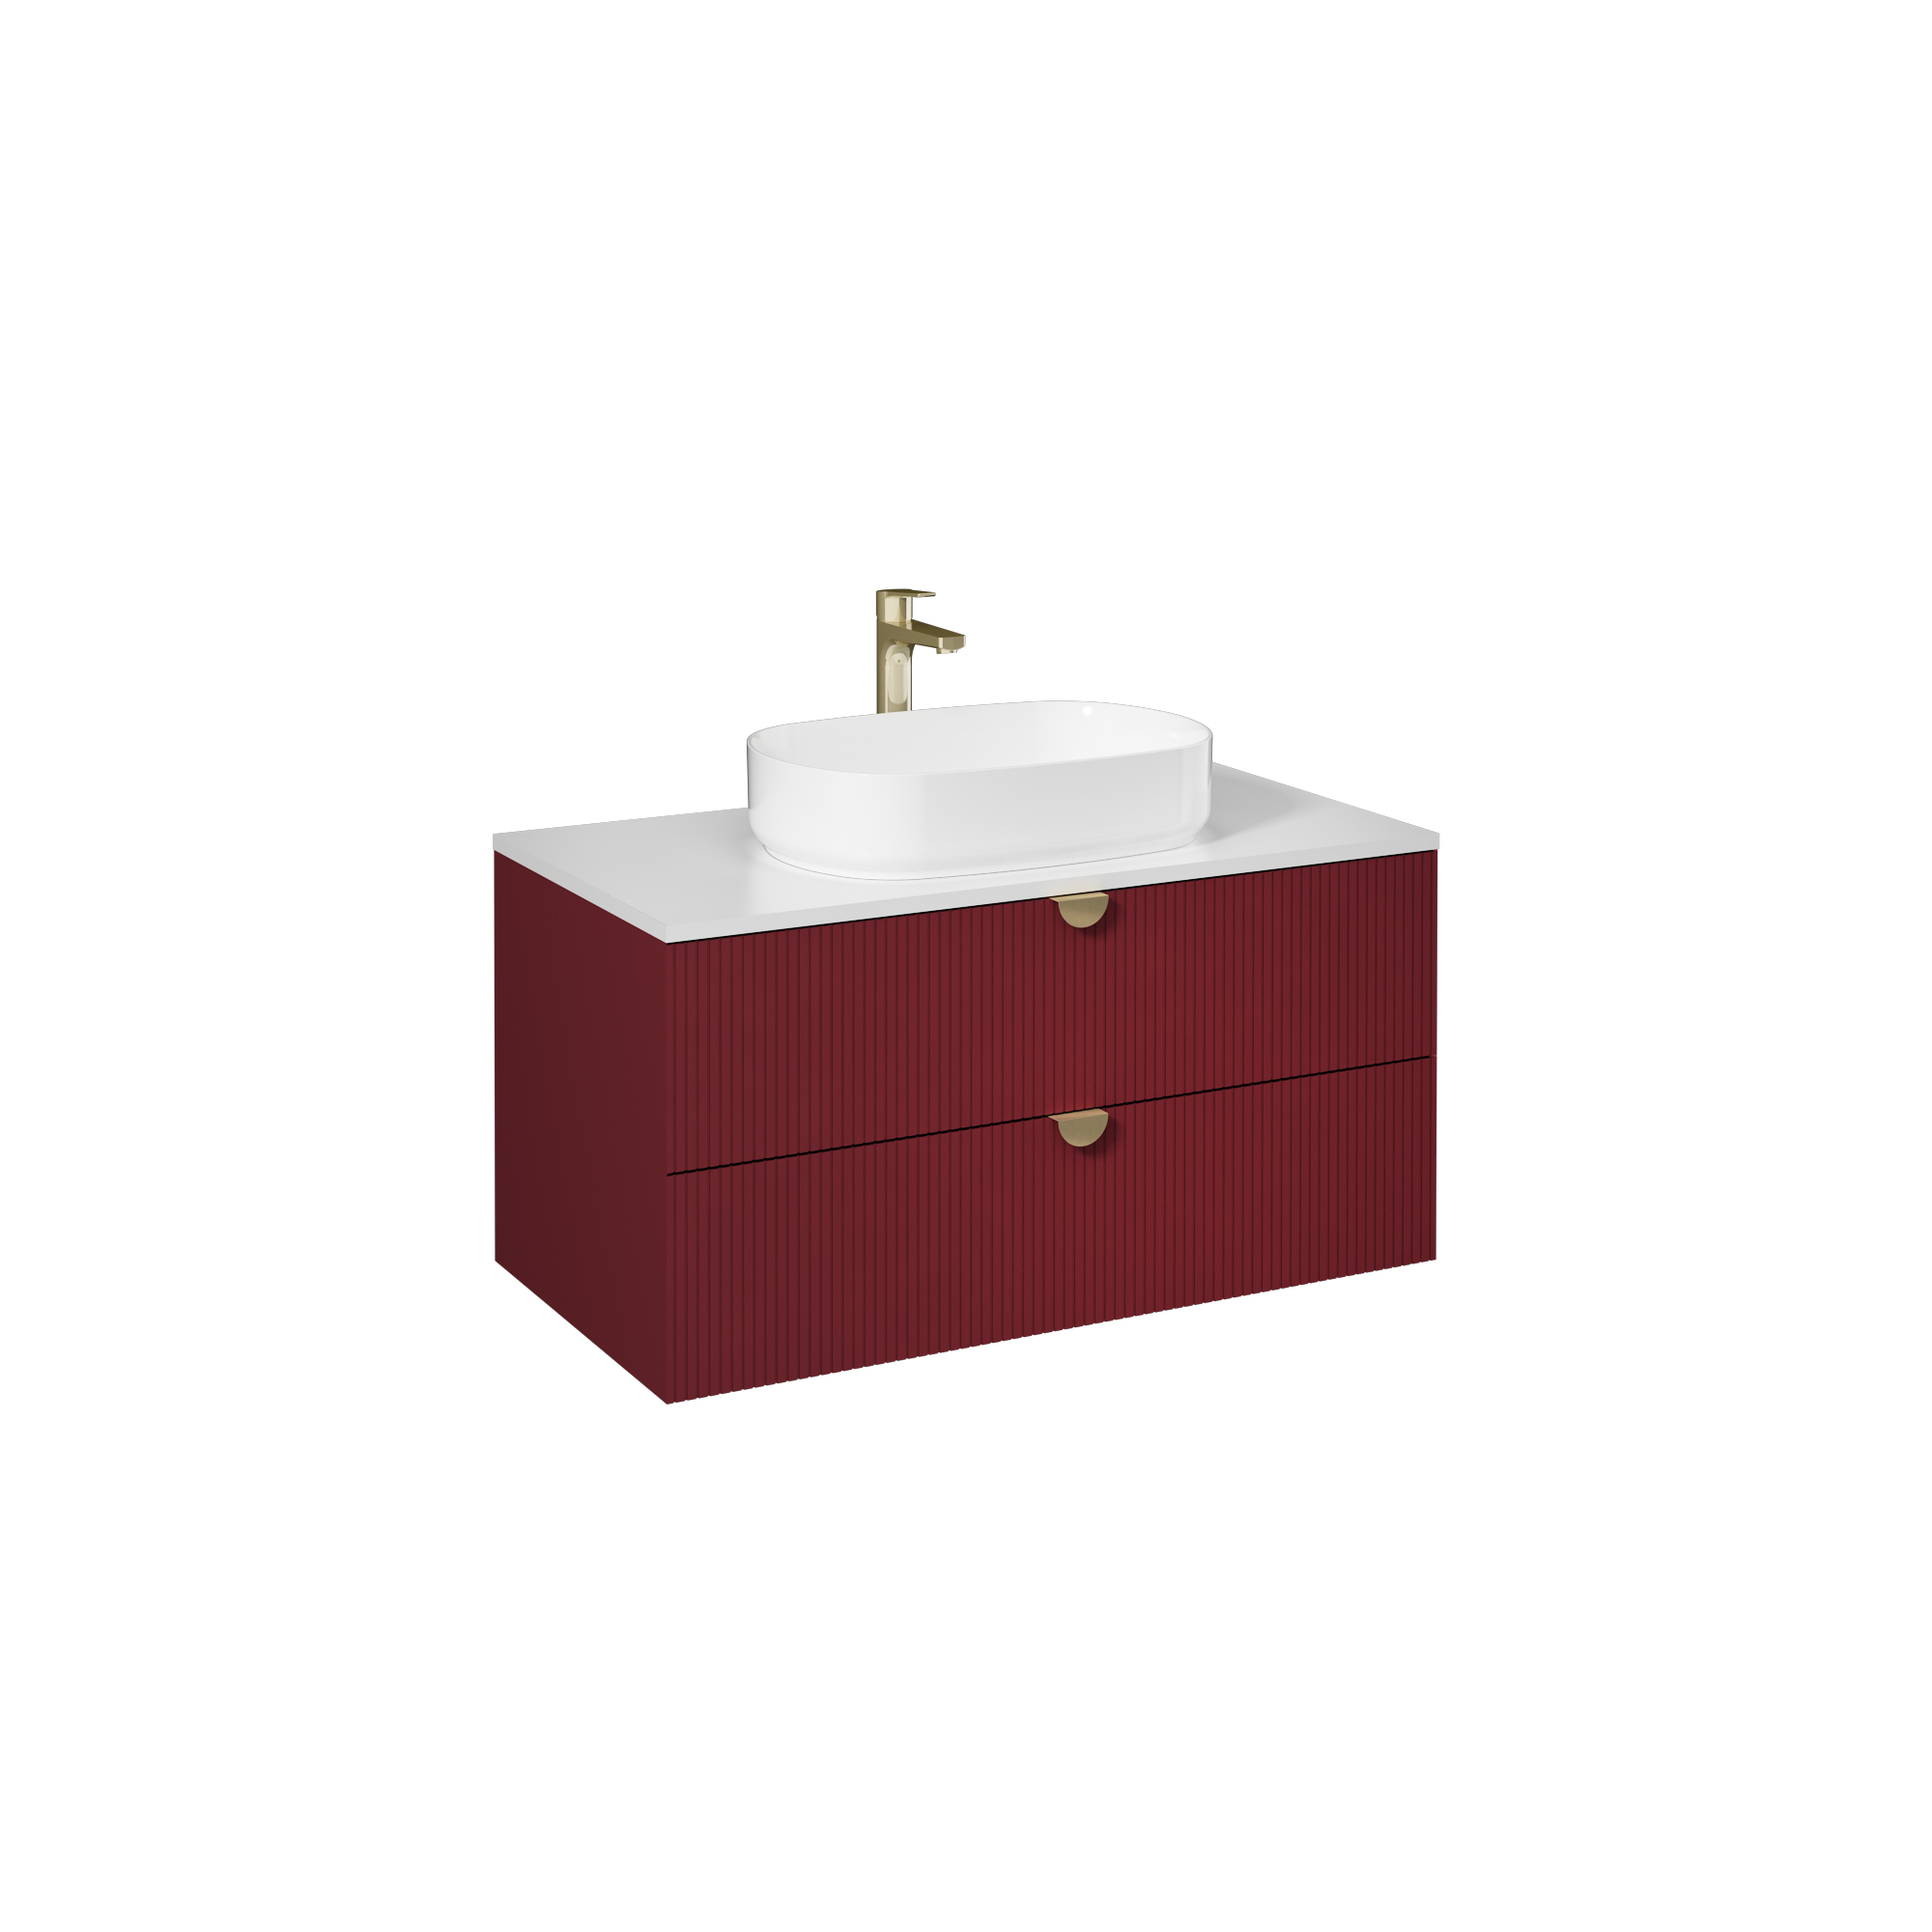 Infinity Washbasin Cabinet, Ruby Red, with White Washbasin 51"